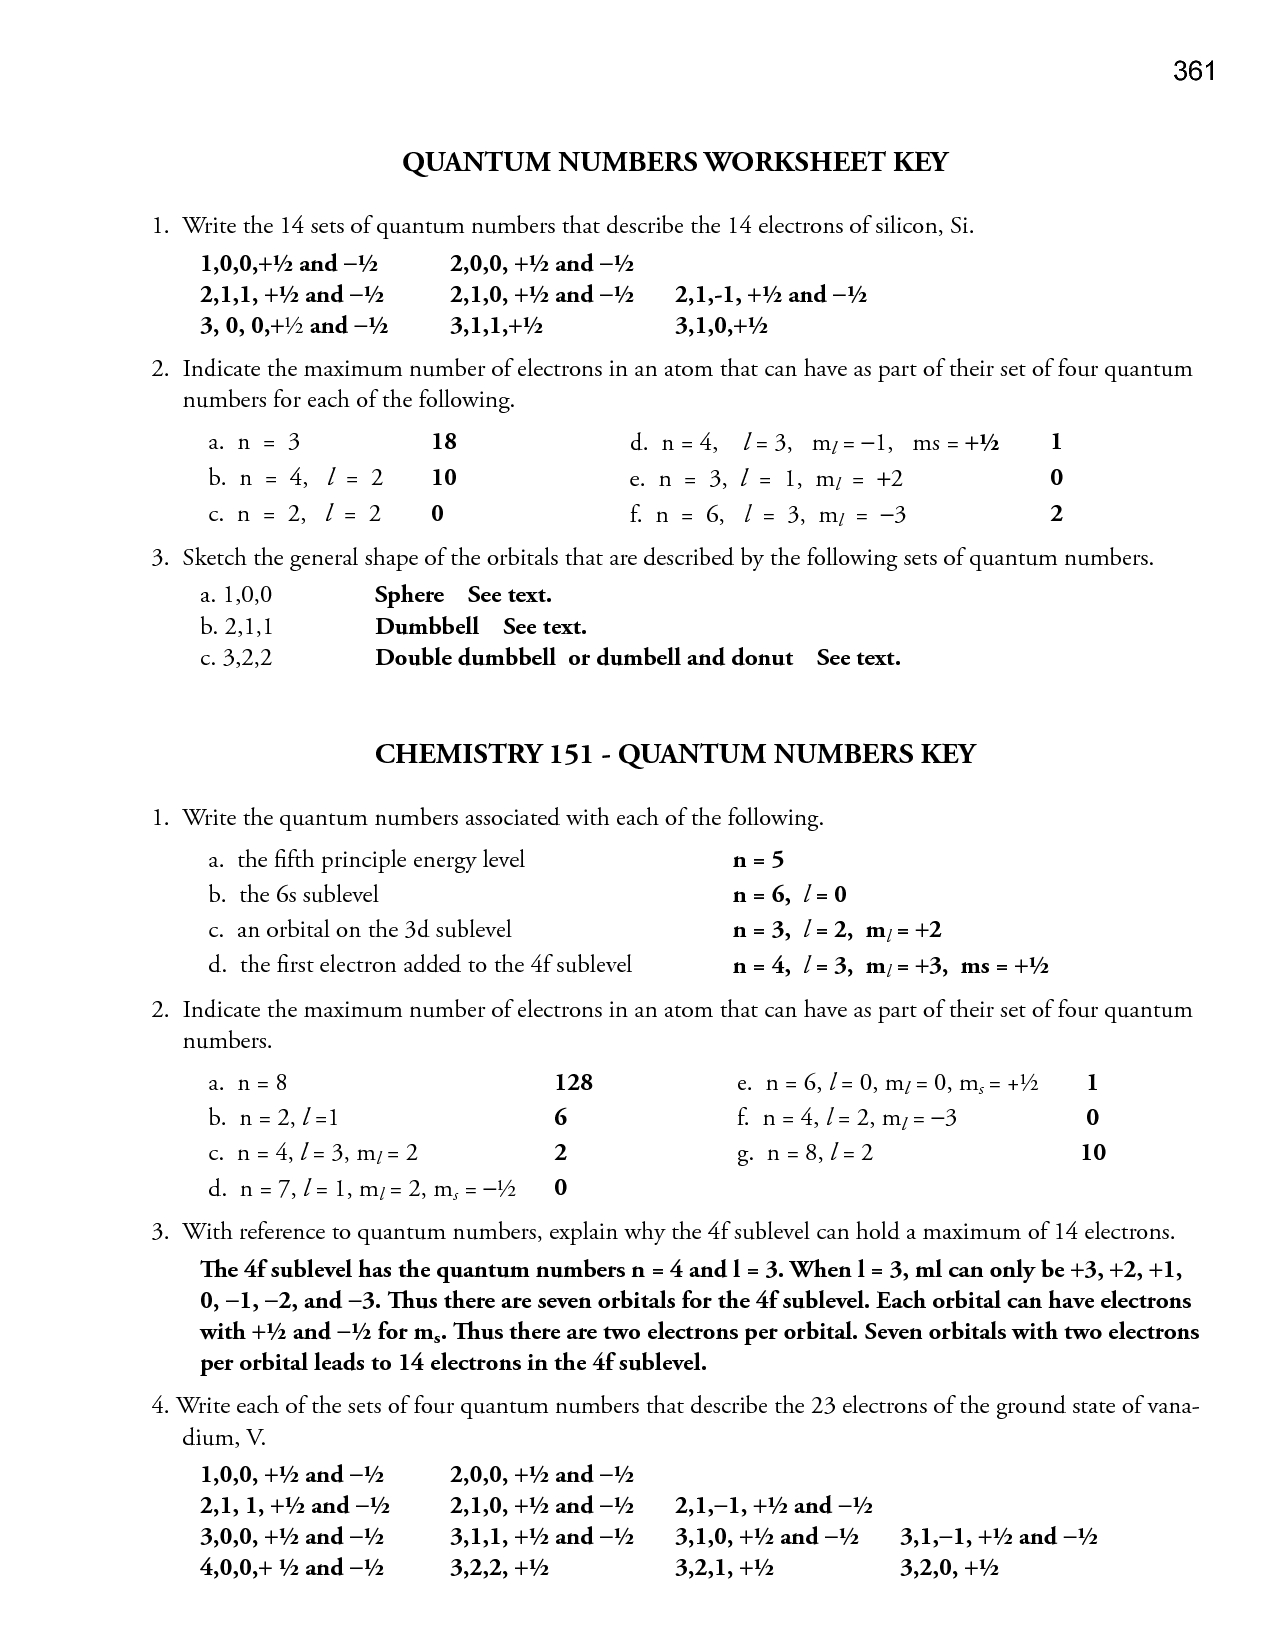 Quantum Numbers Worksheet Answers  Fatmatoru Intended For Quantum Numbers Practice Worksheet